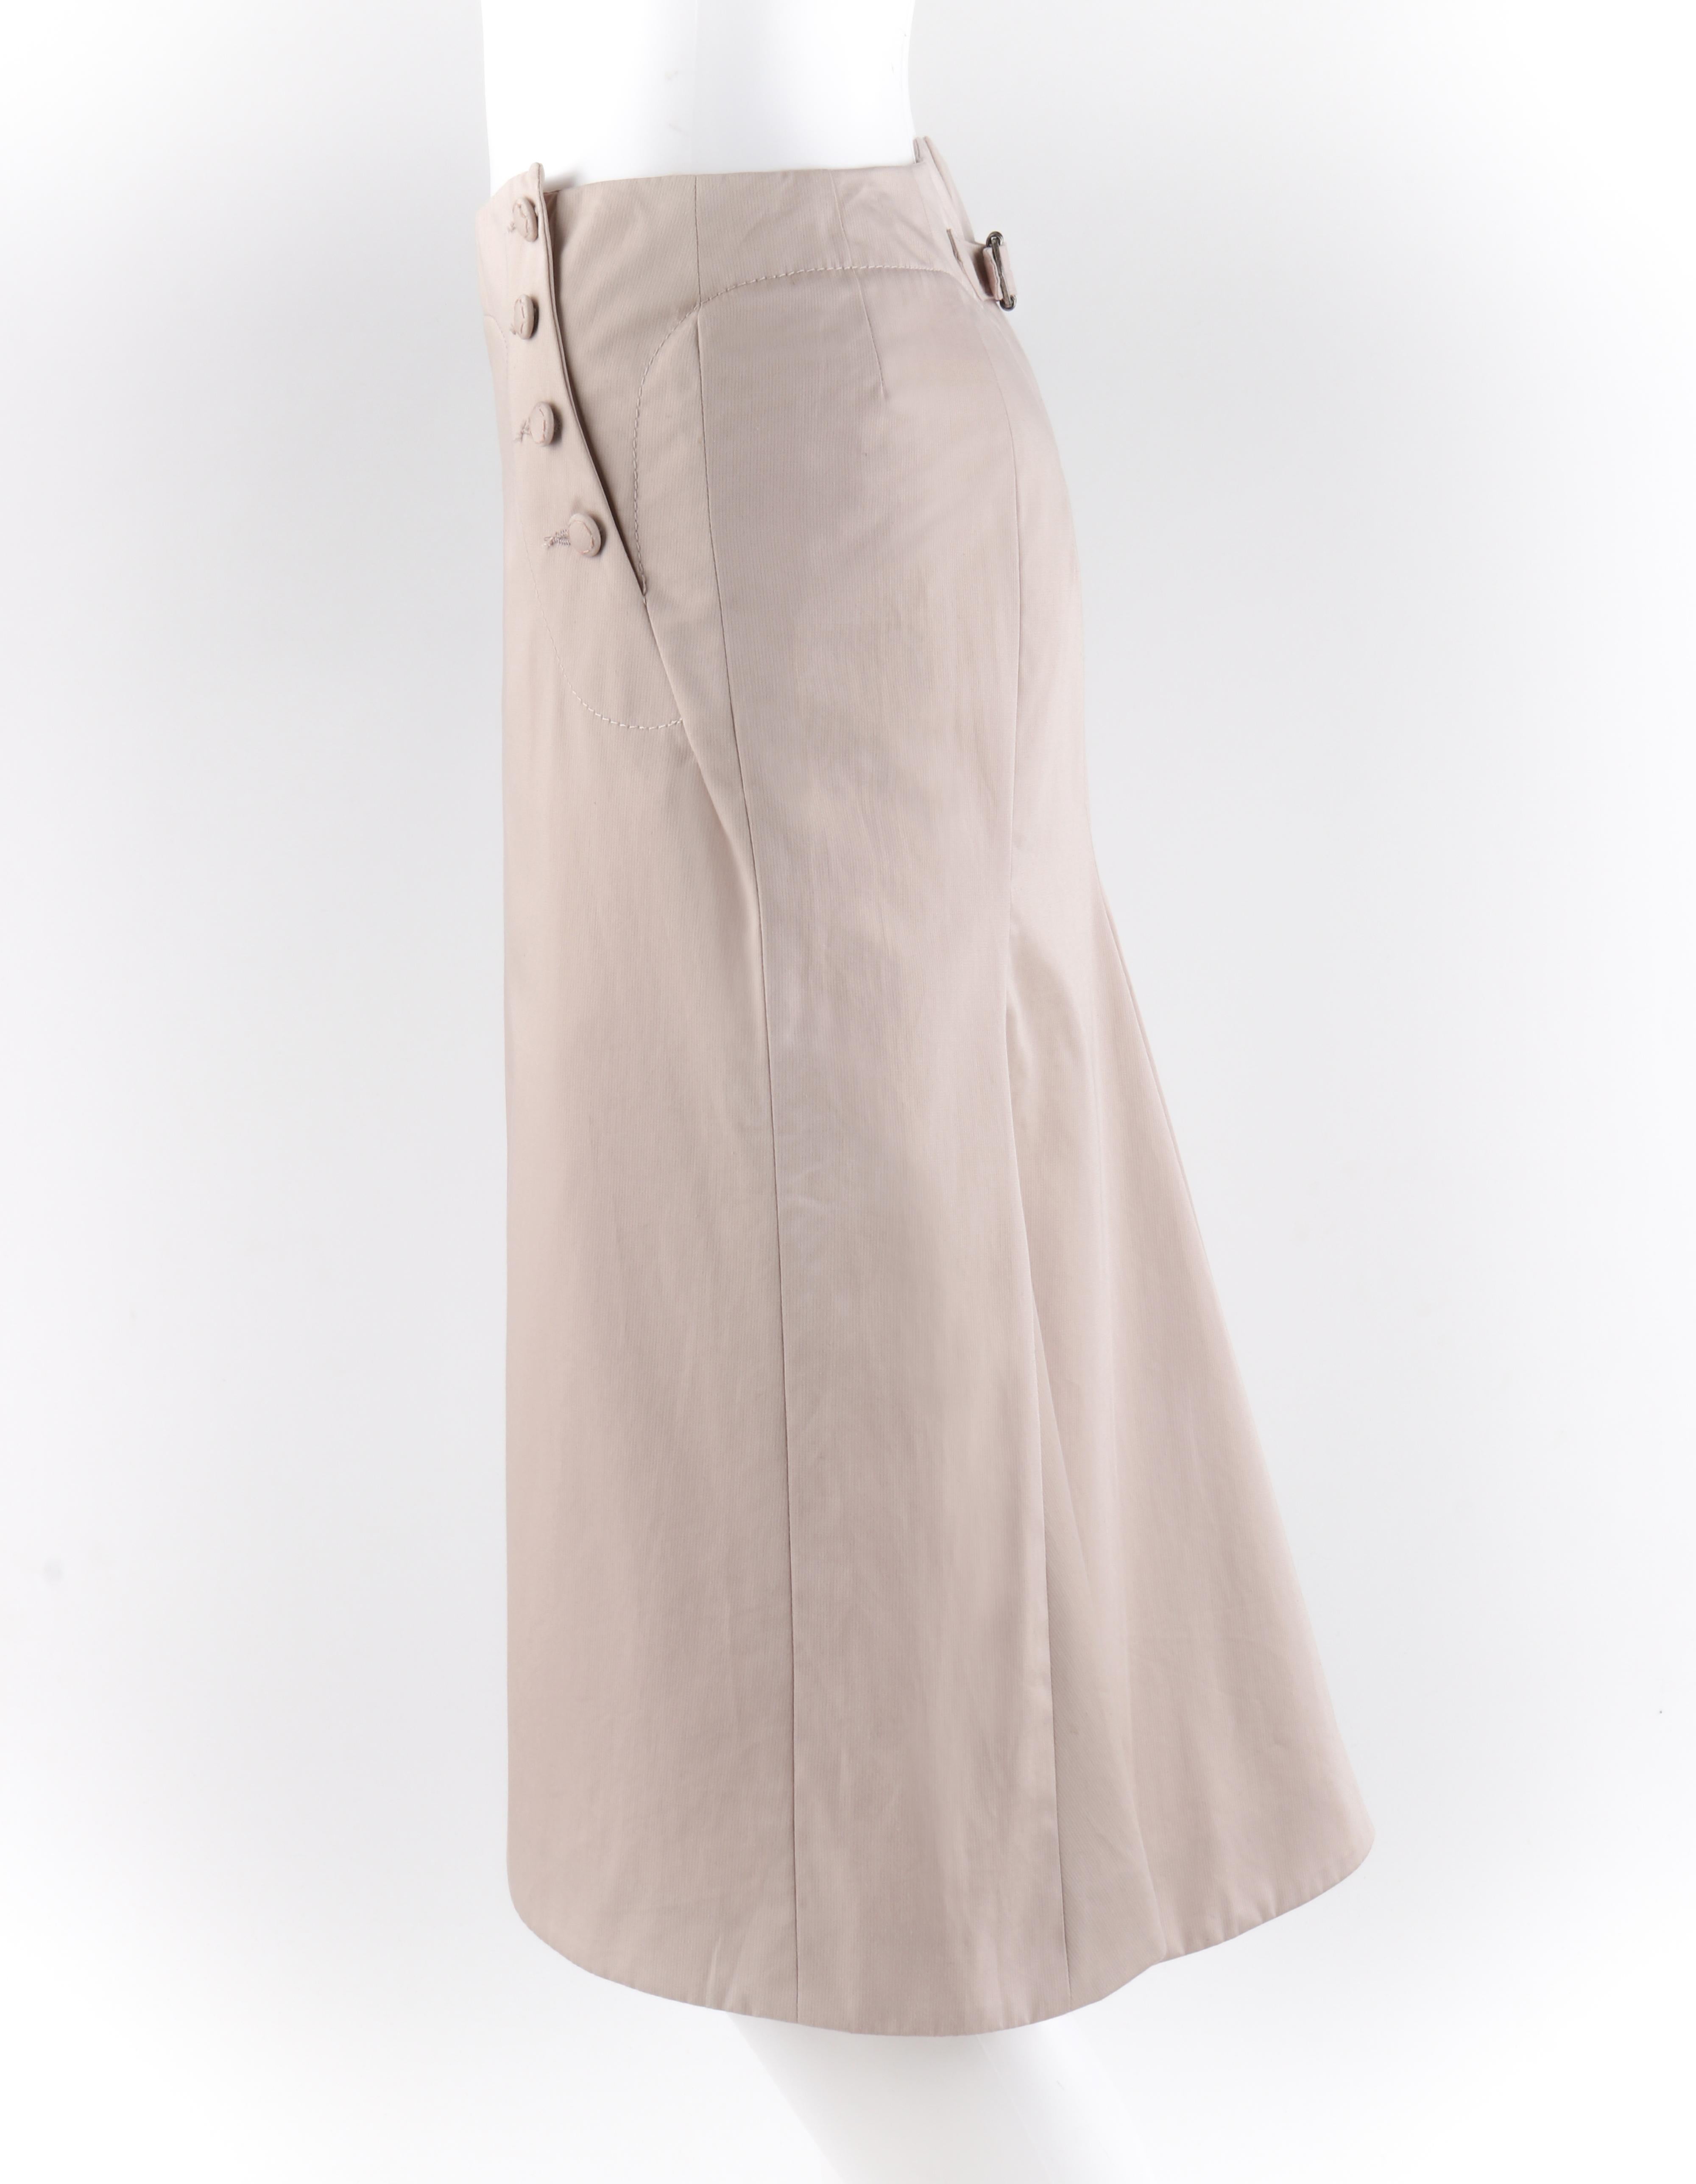 Beige ALEXANDER McQUEEN S/S 2007 “Saraband” Blush High Rise Double Button Front Skirt